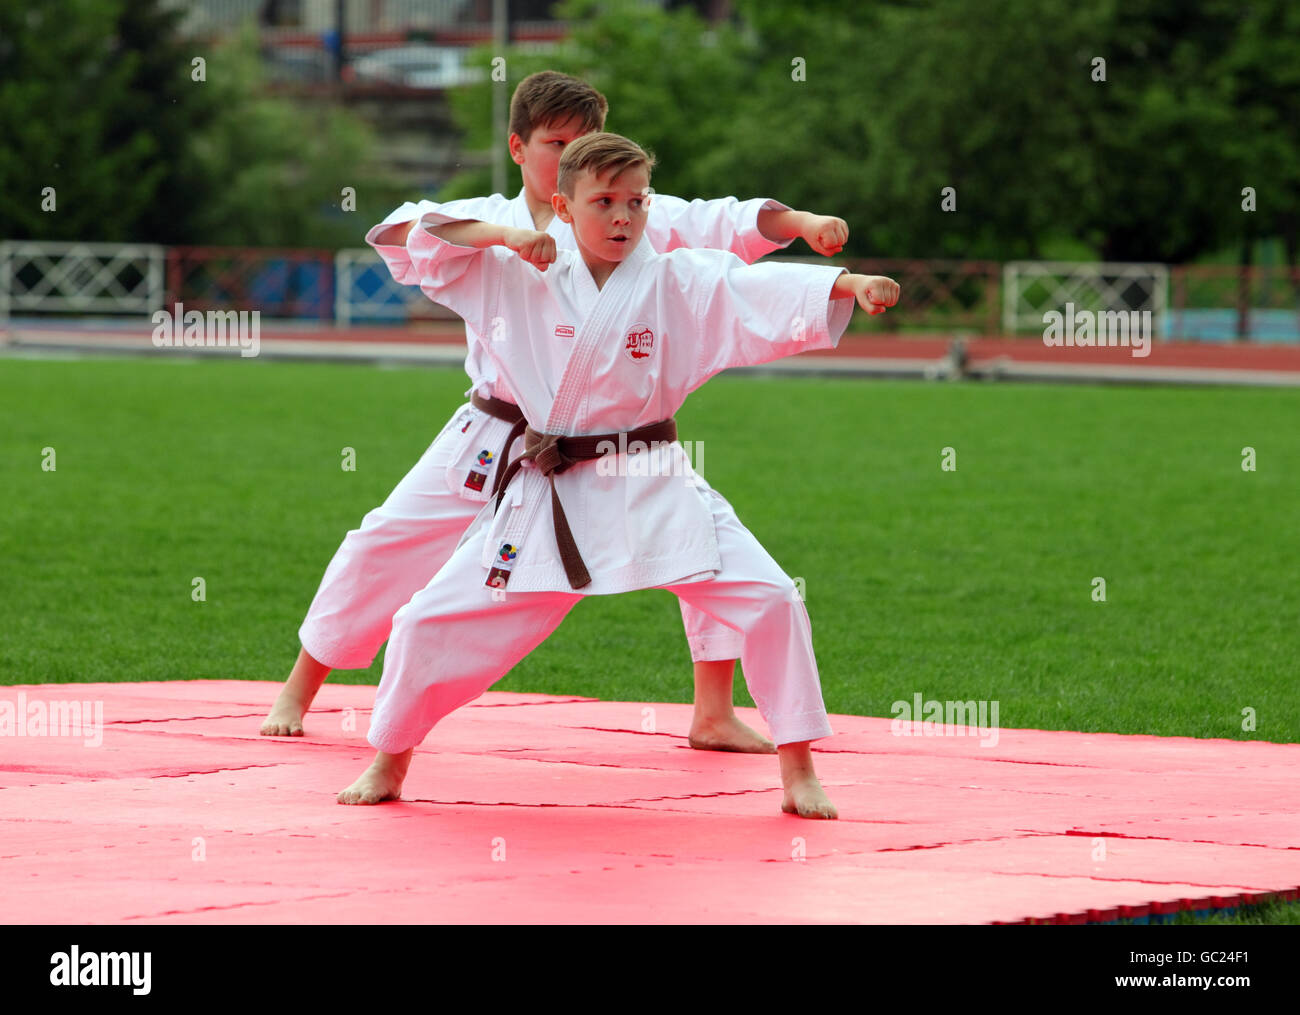 Kinder-Karate-Training im freien Stockfoto